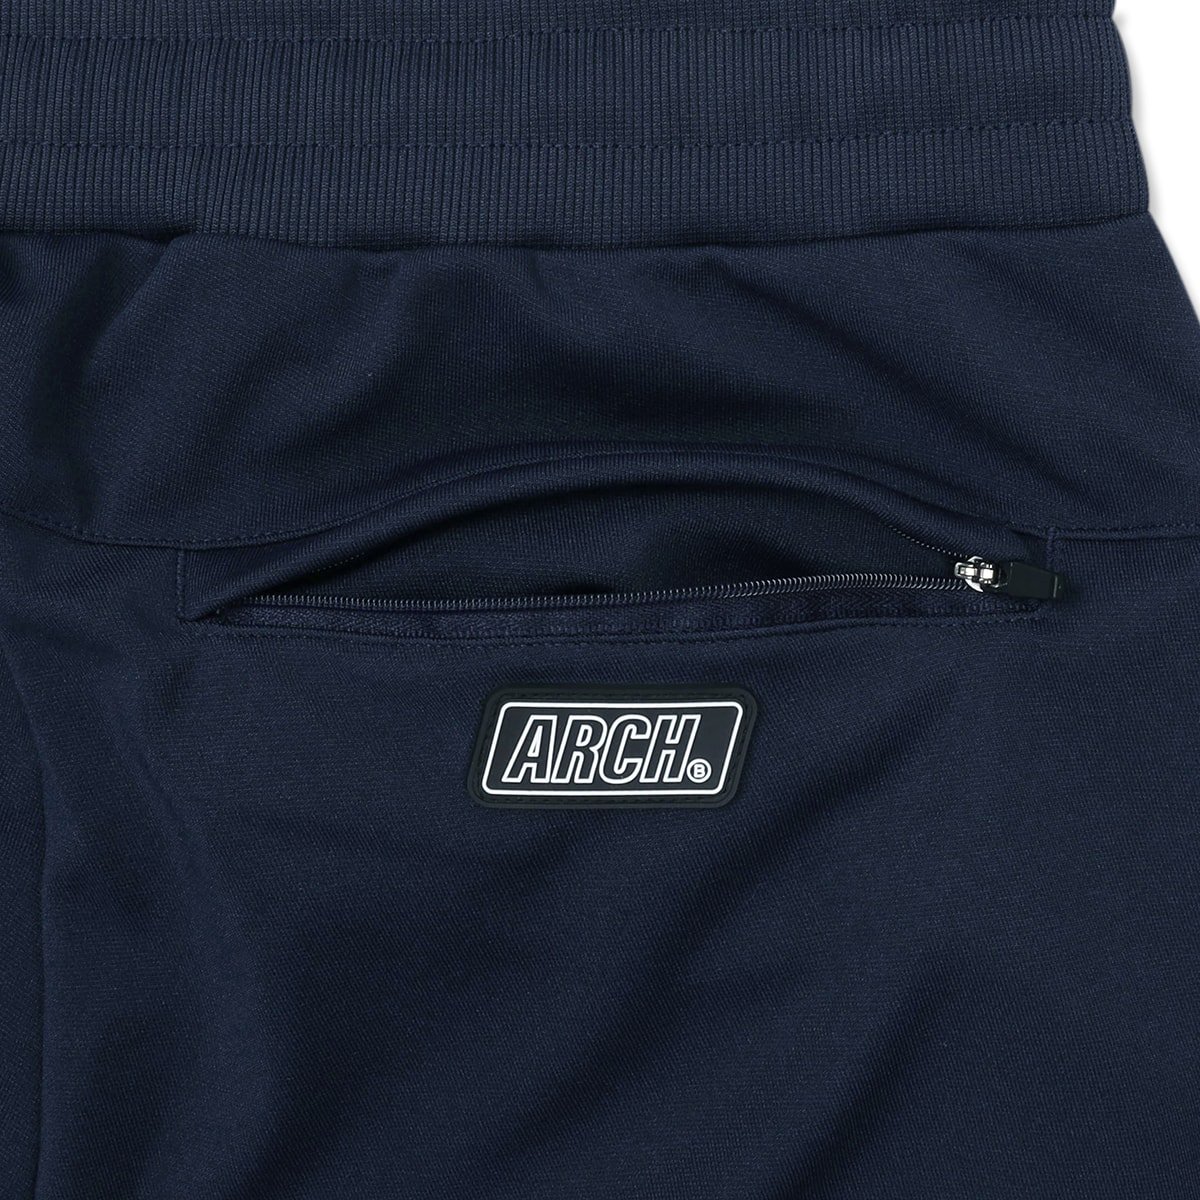 racing B jersey jogger pants【navy】 - Arch ☆ アーチ